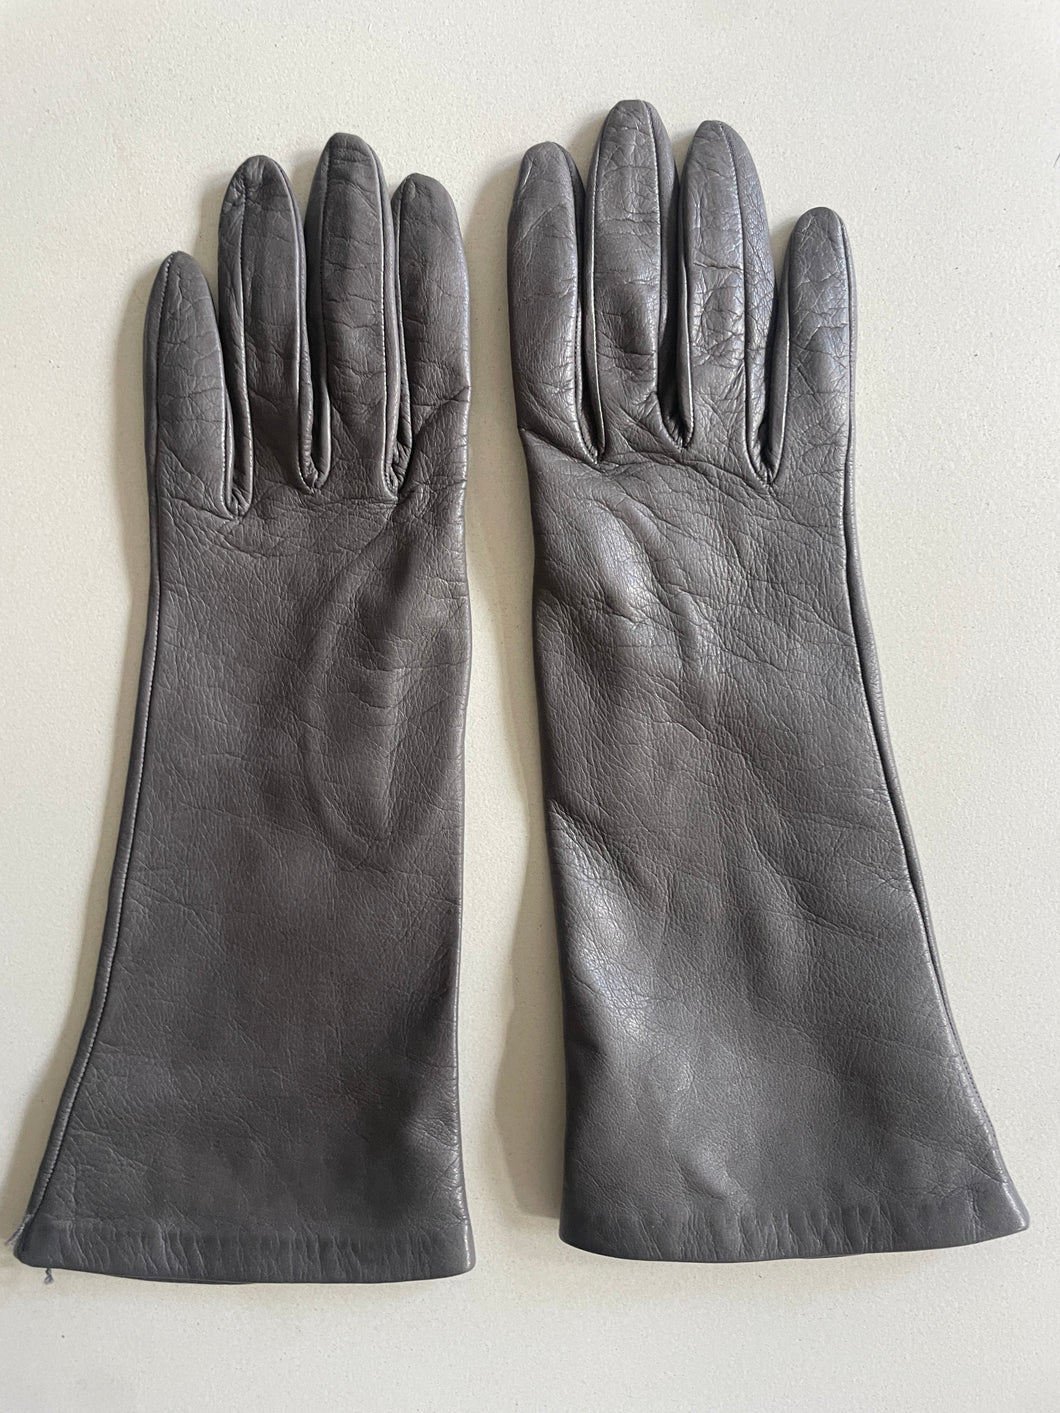 Vintage Gray Kid Leather Gloves